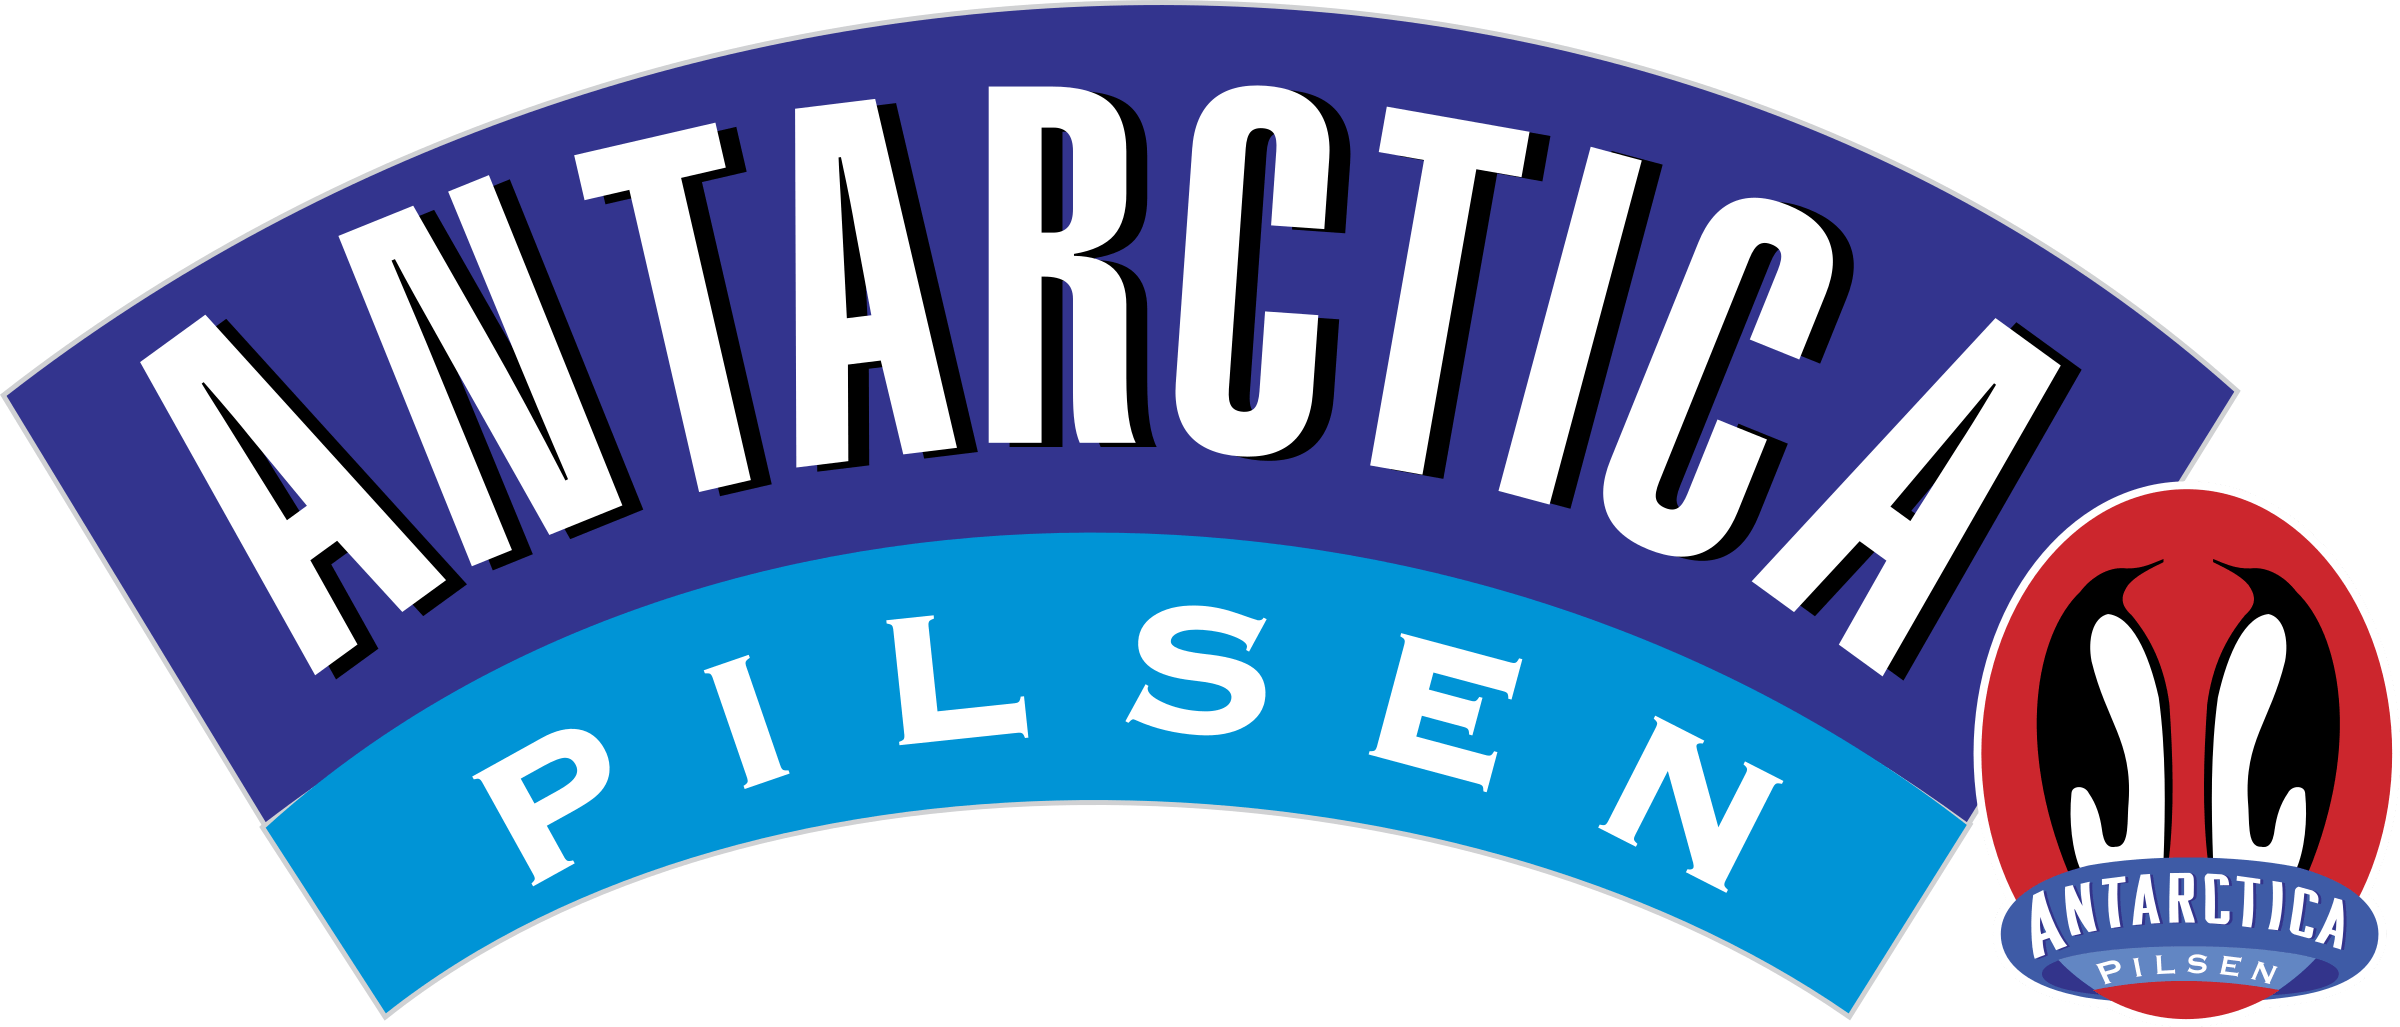 Antarctica Logo Png 2